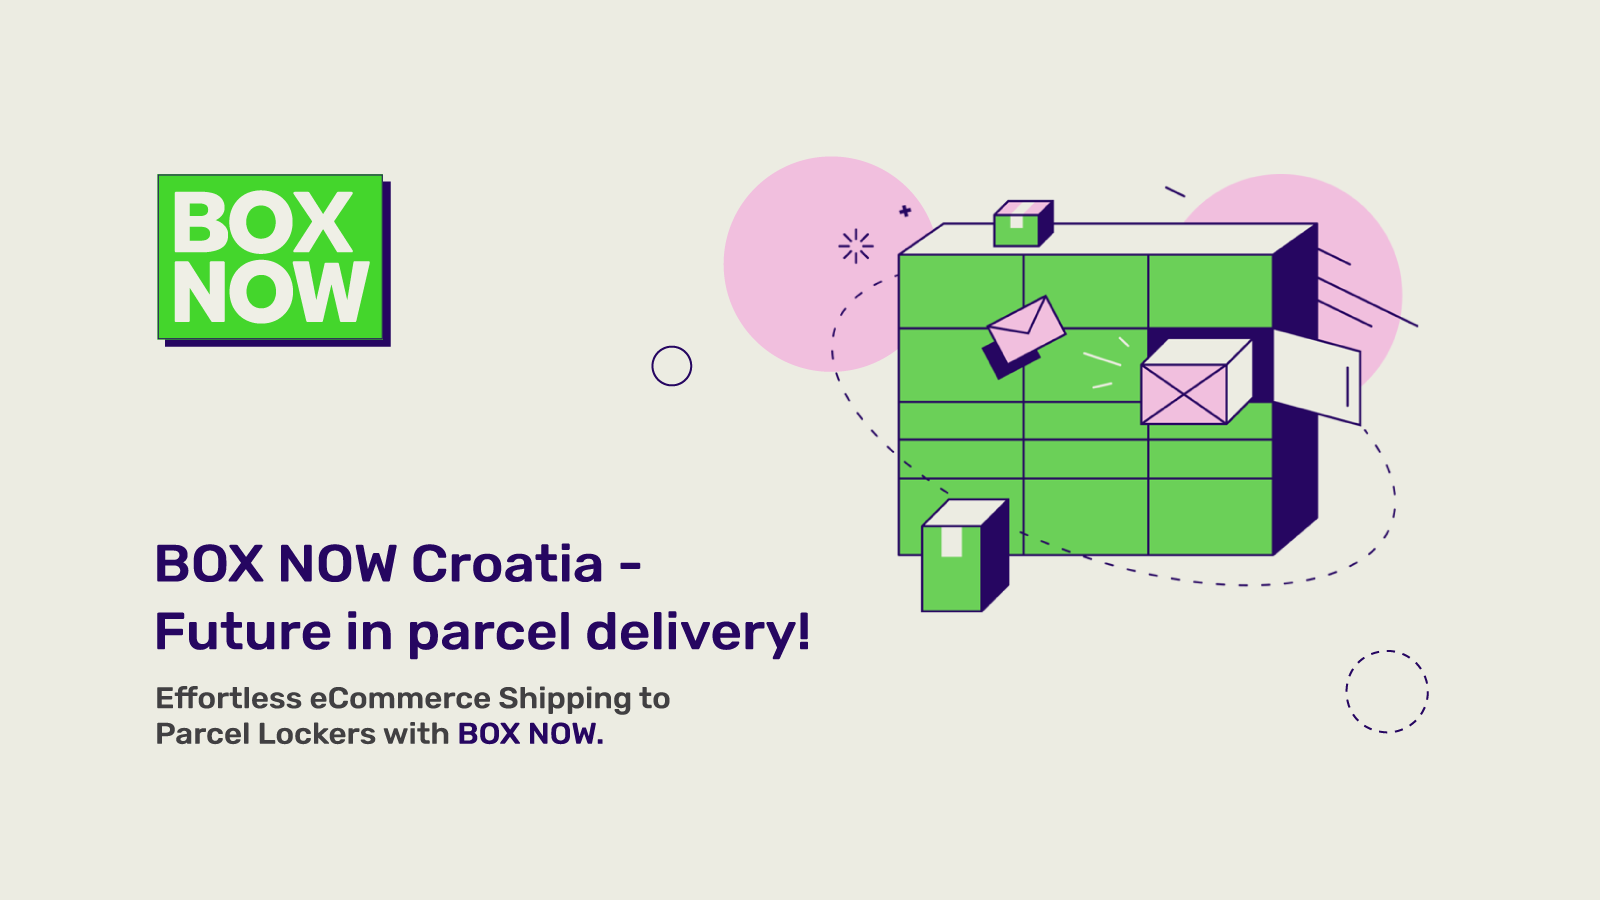 BOX NOW Croatia - Framtiden inom paketleverans!